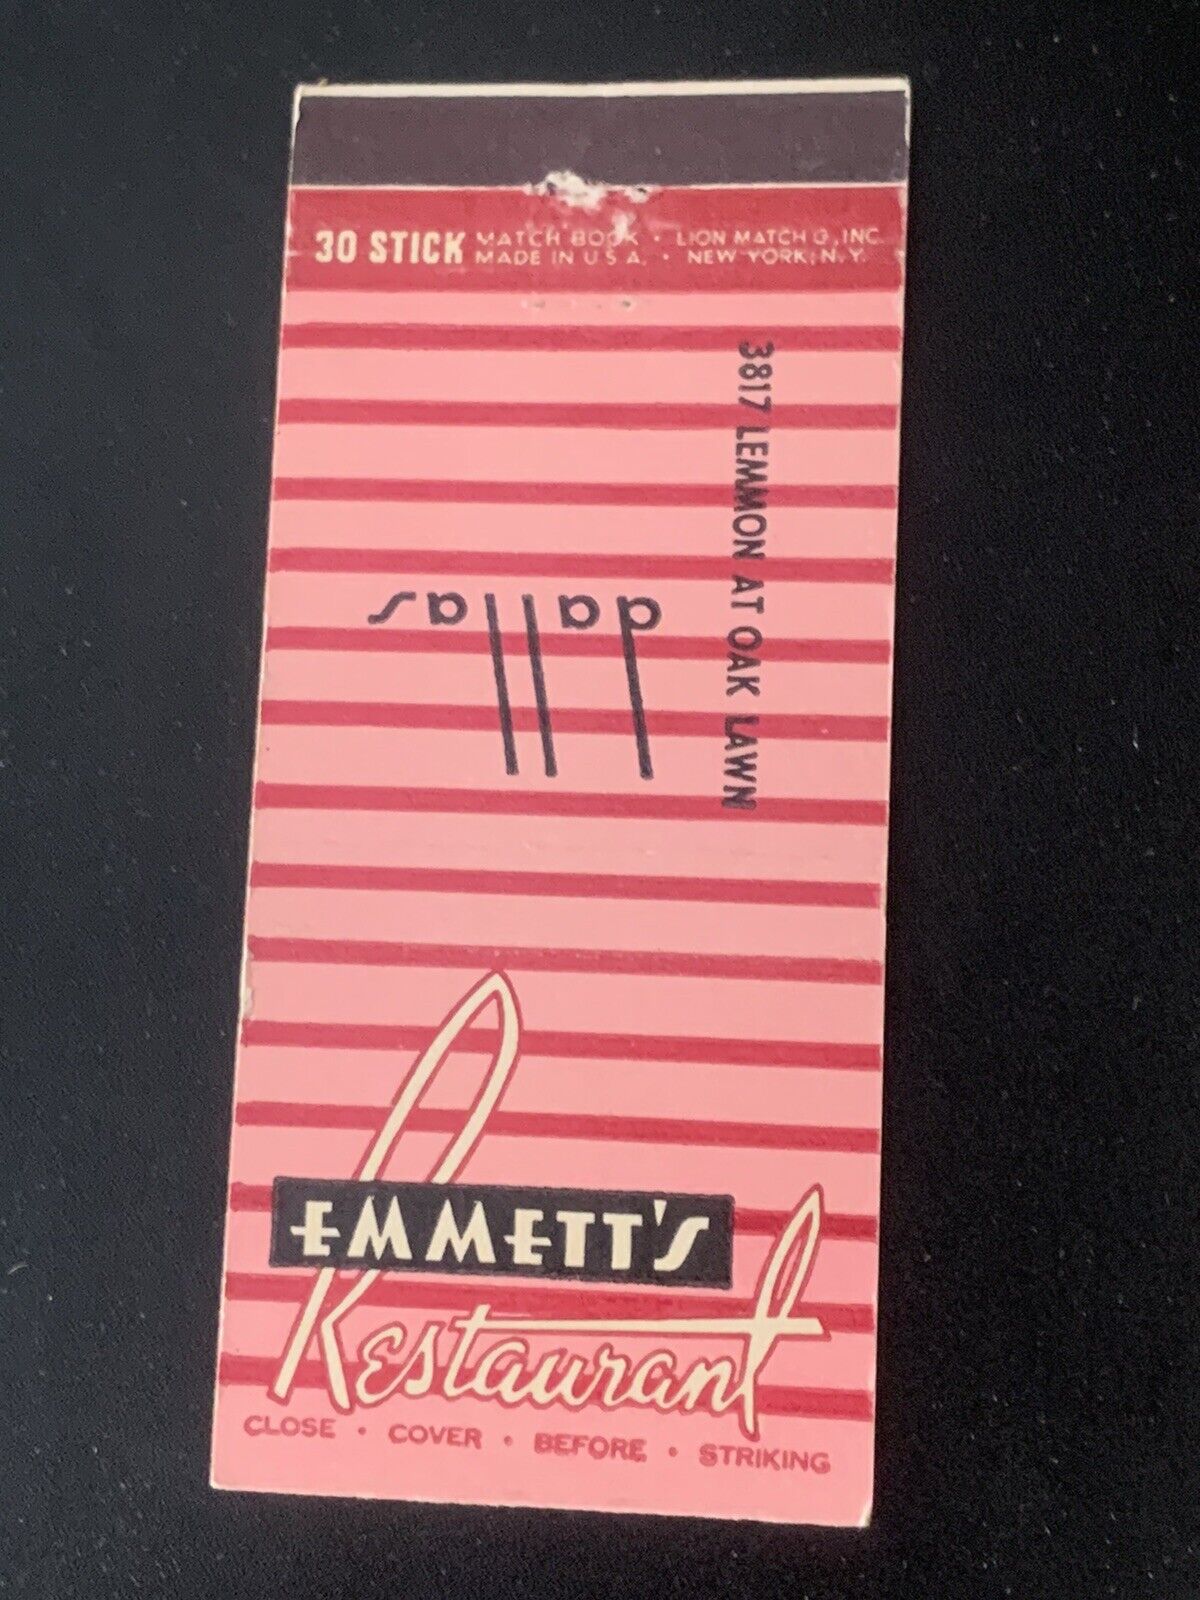 Vintage Texas Matchbook “Emmett’s Restaurant” Dallas, TX